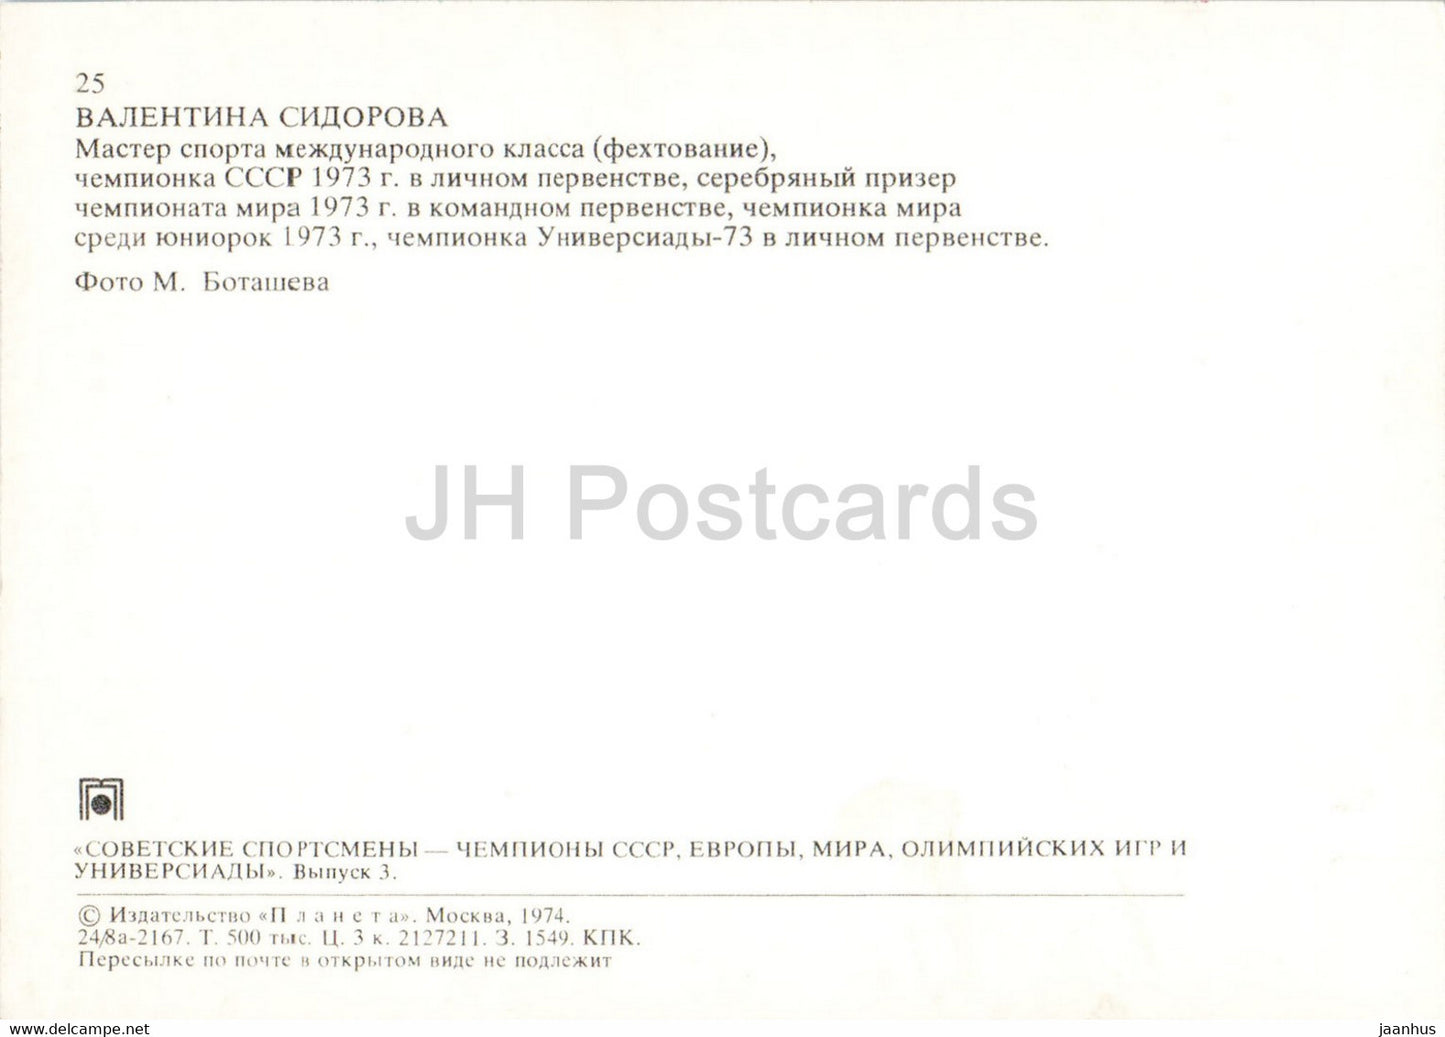 Valentina Sidorova - fencing - Soviet champions - sports - 1974 - Russia USSR - unused